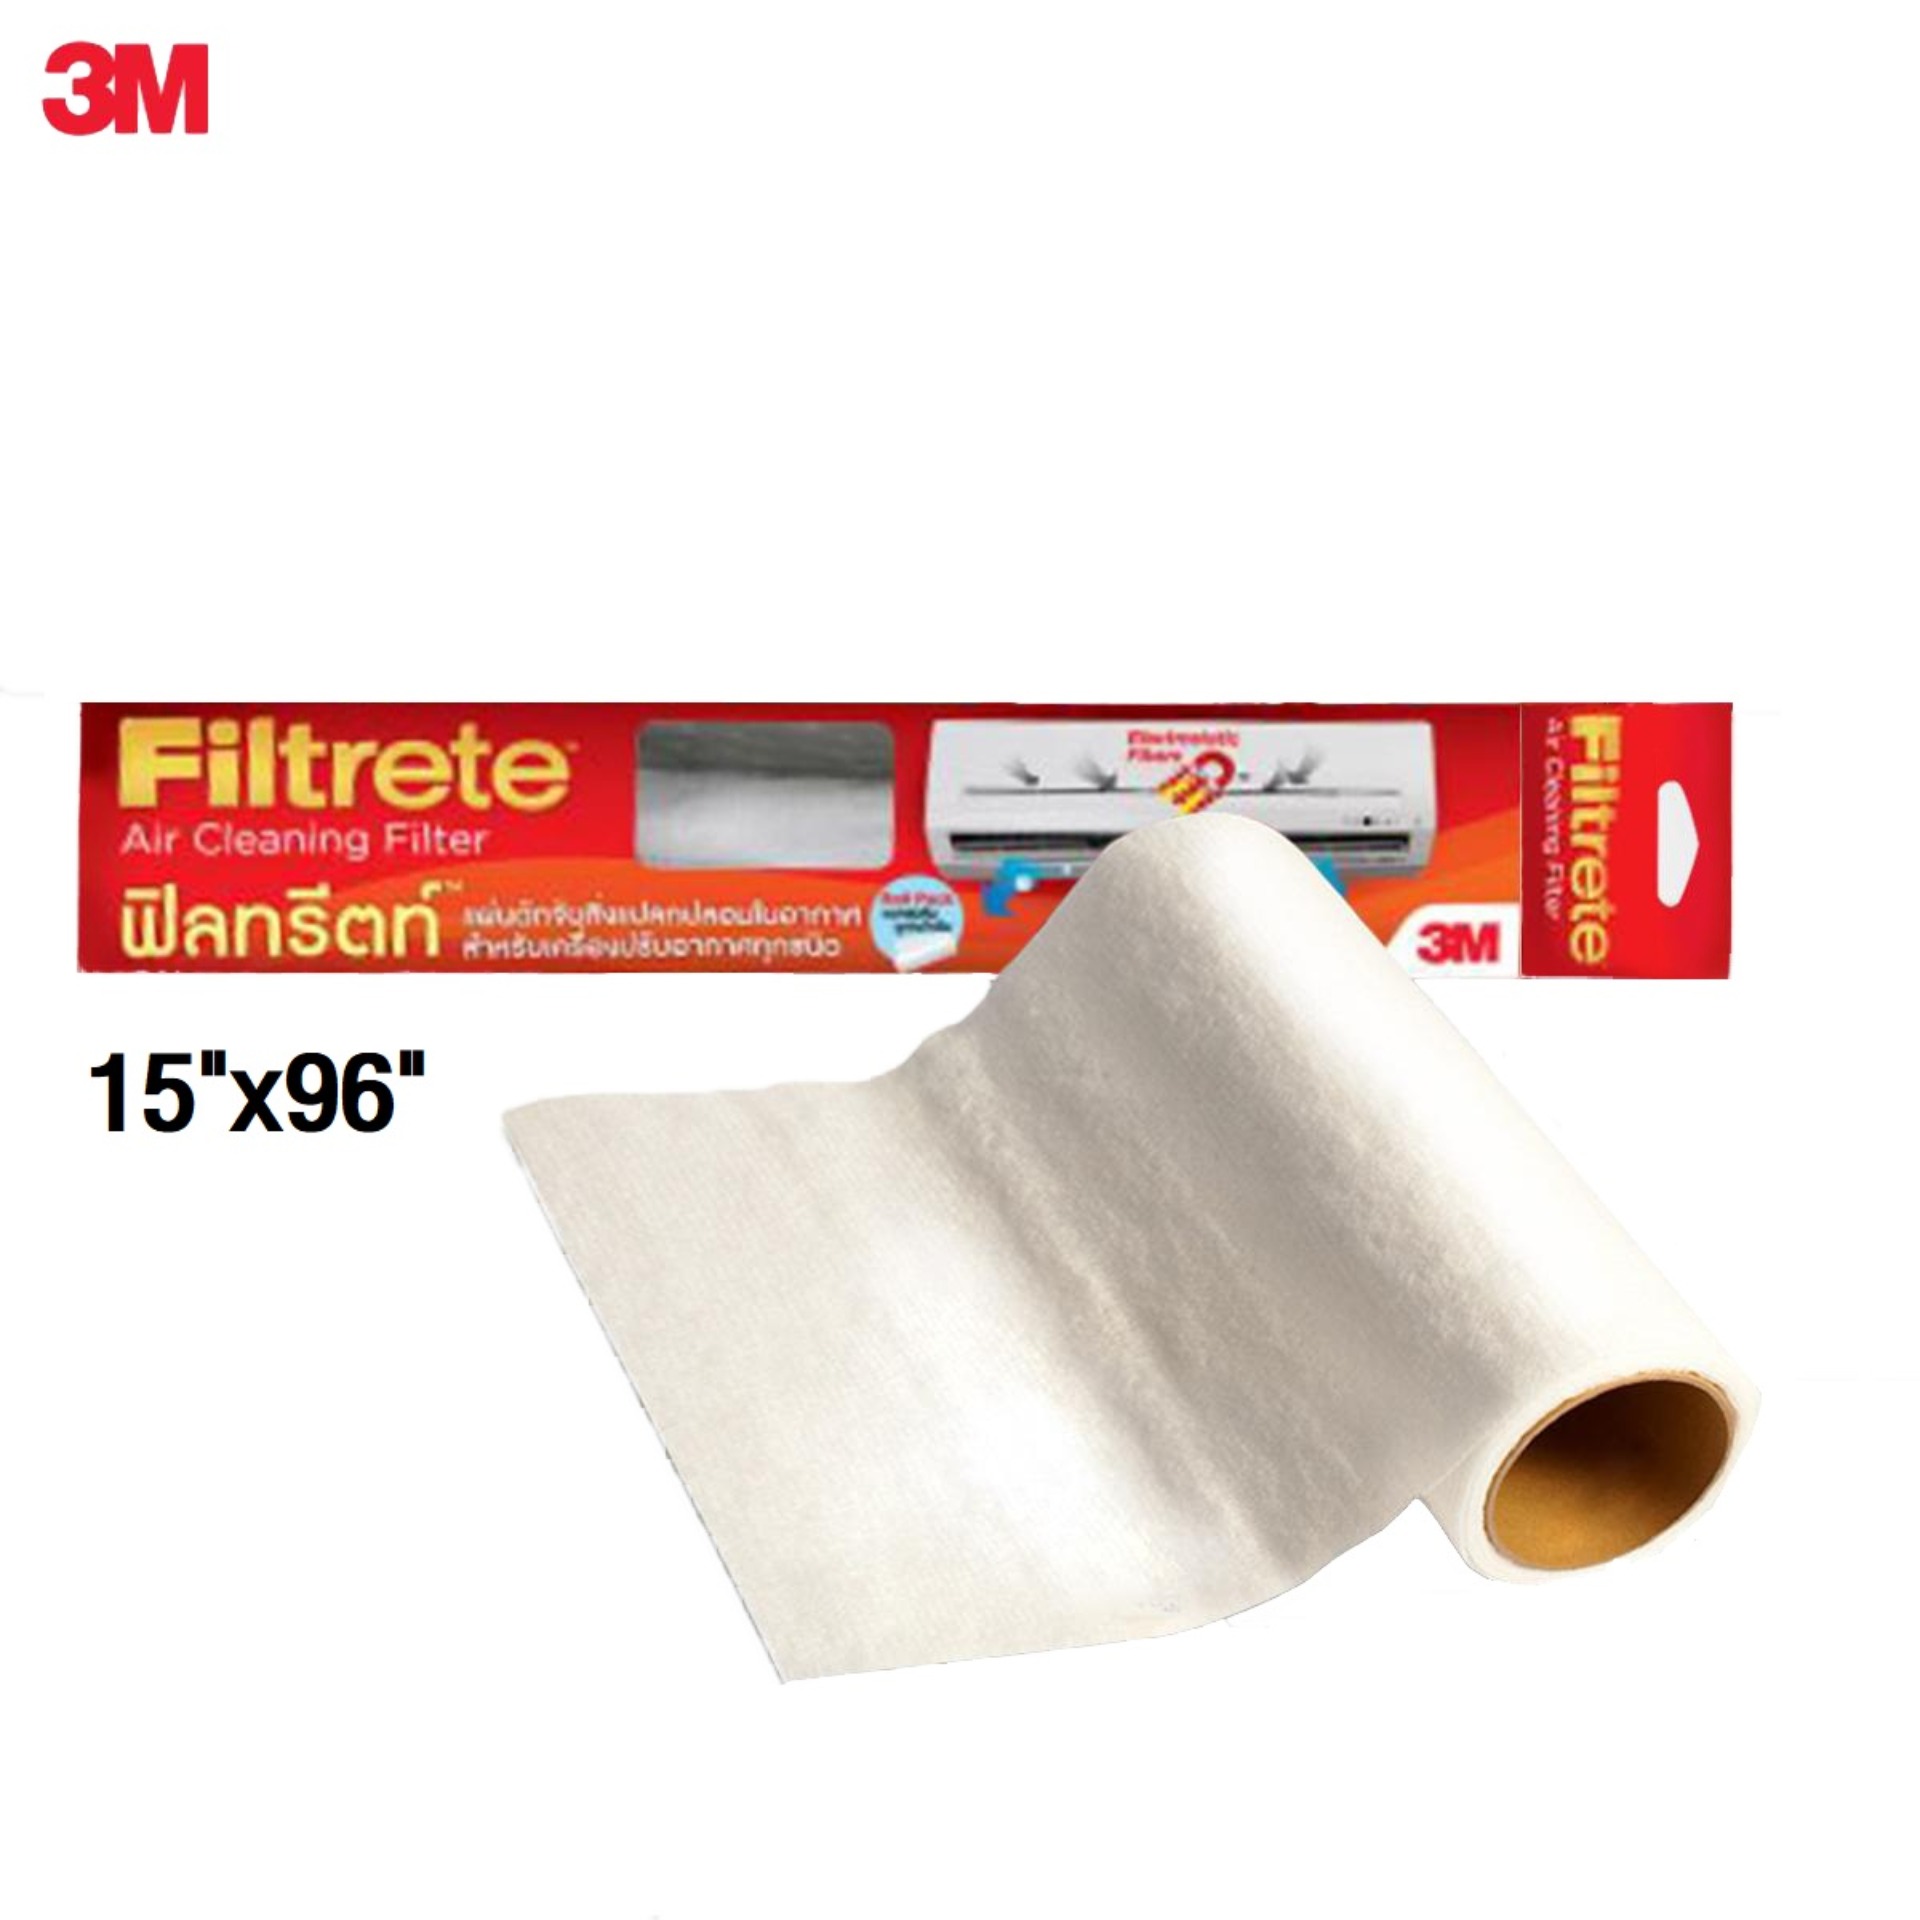 3M Filtrete 15x96 นิ้ว แผ่นดักจับสิ่งแปลกปลอมในอากาศ ฟิลทรีตท์